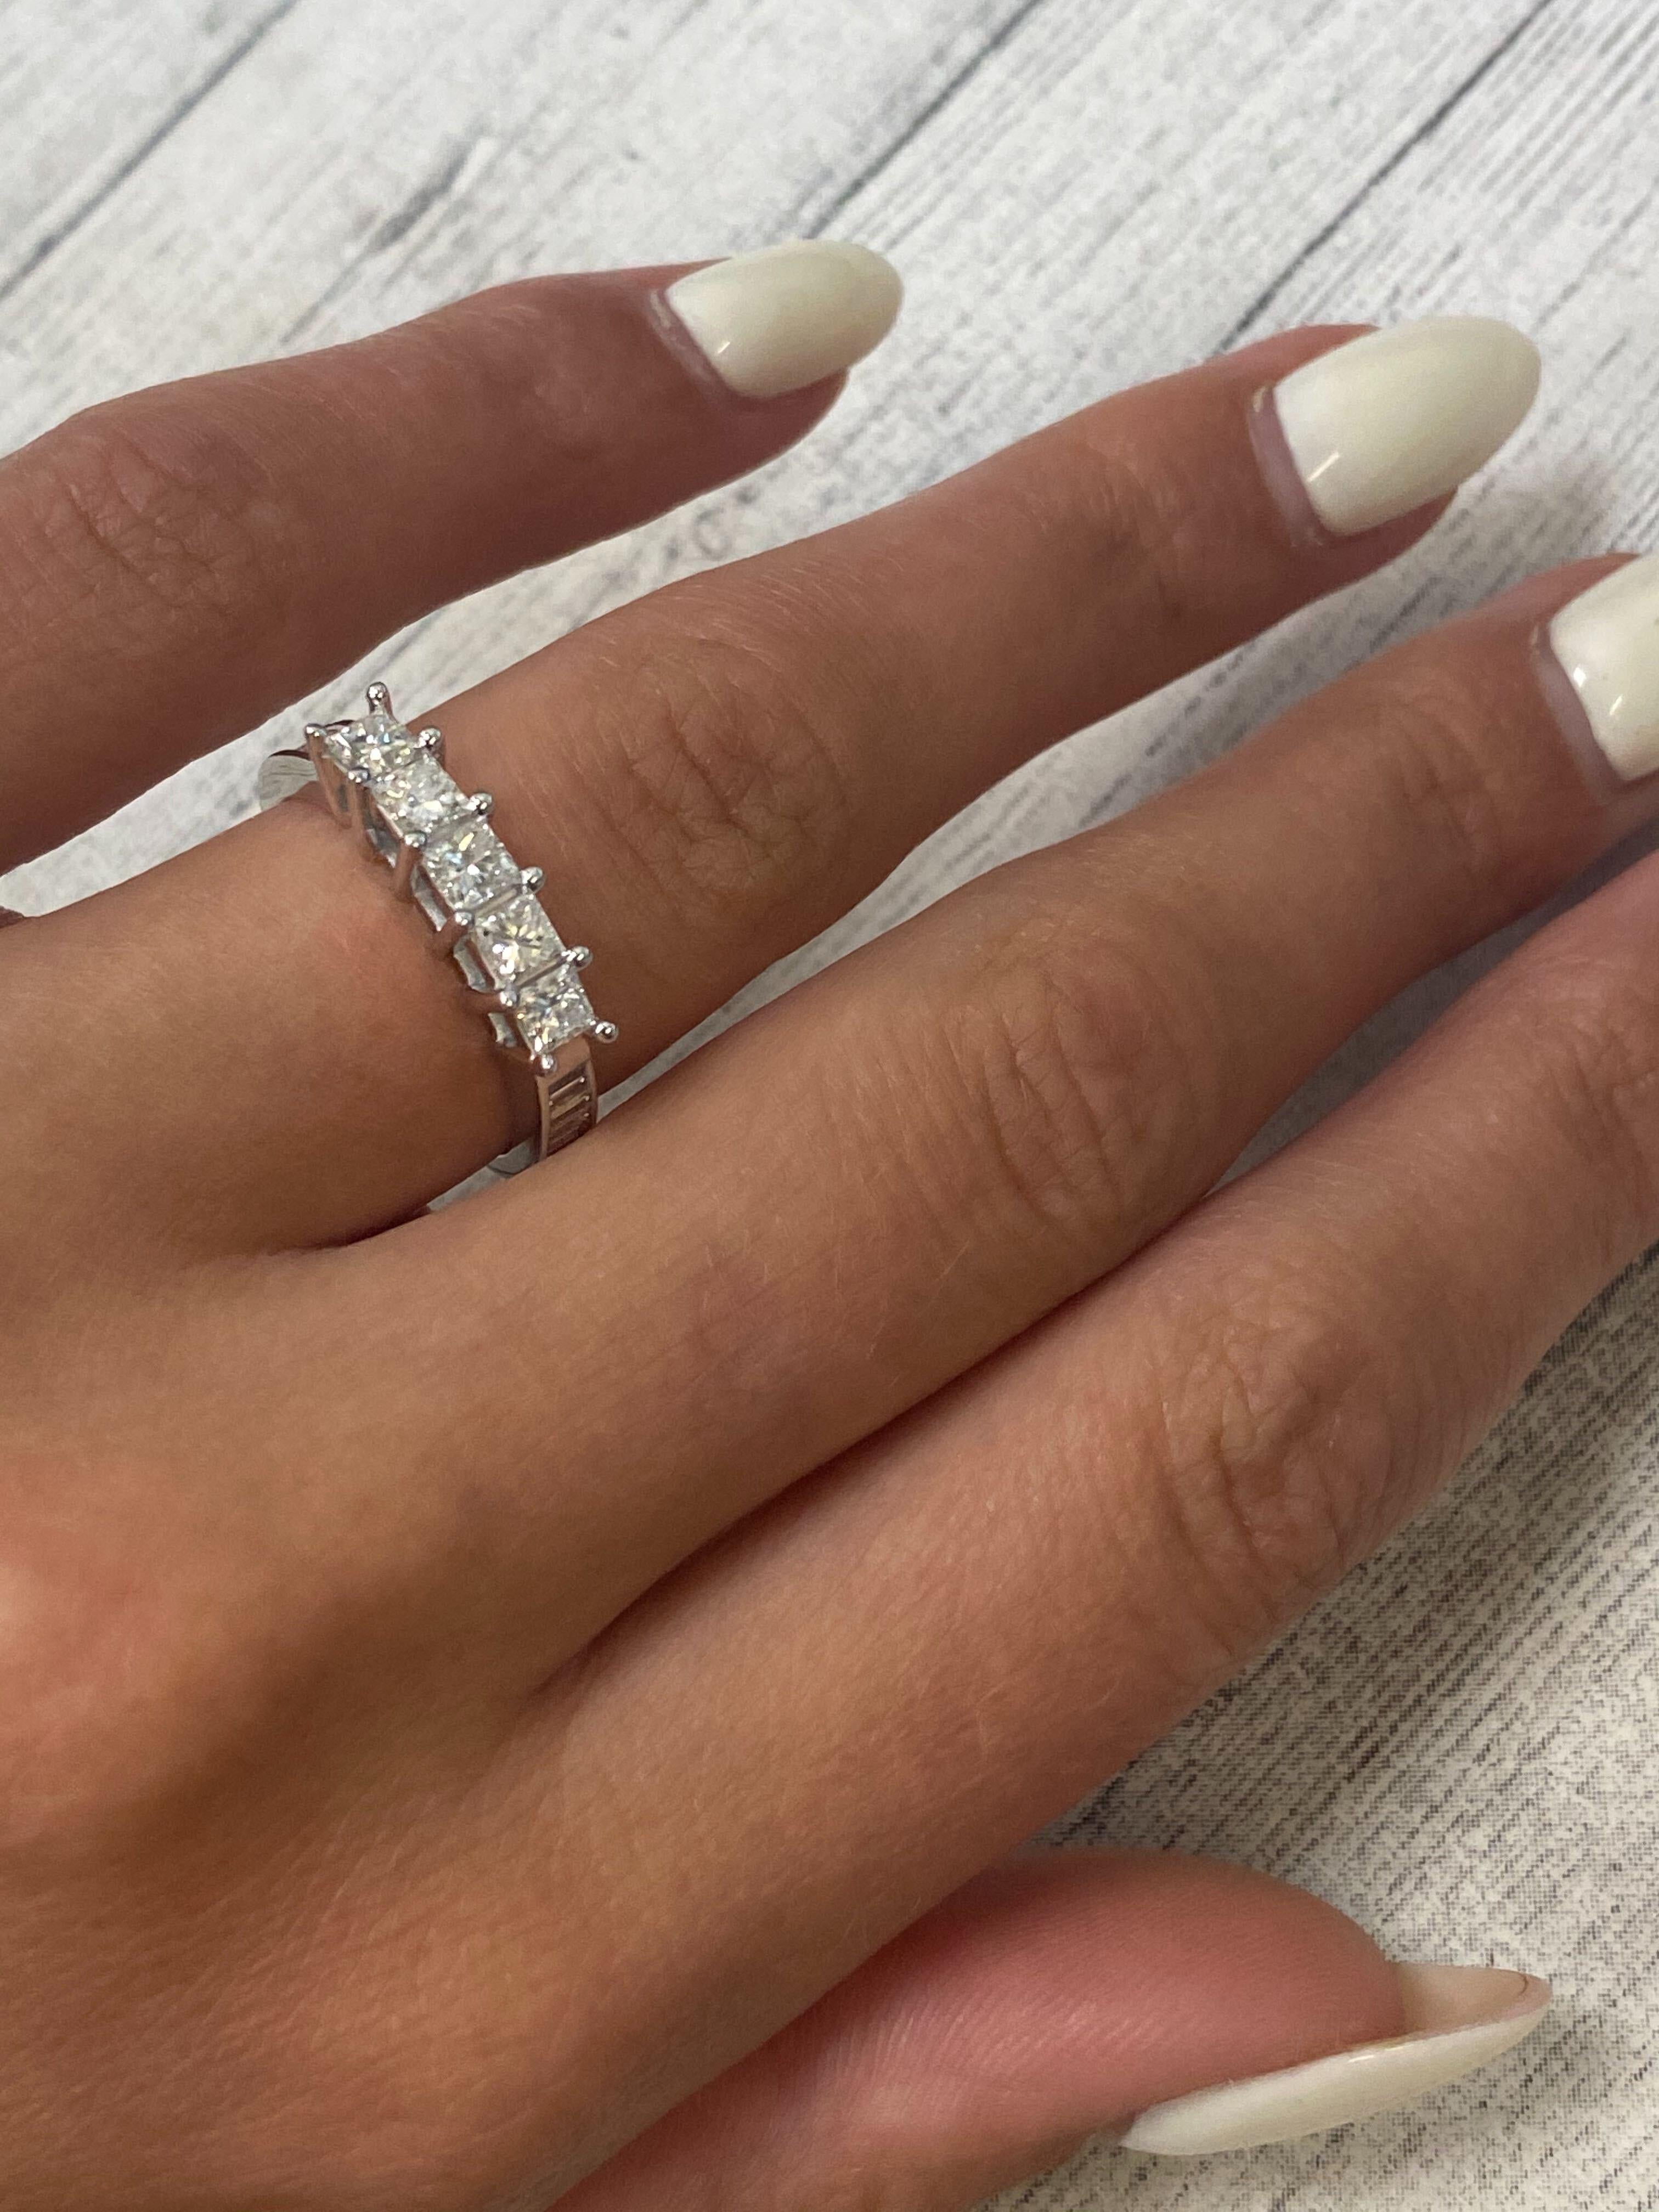 Rachel Koen Princess Cut Diamond Wedding Band Ring 14K White Gold 1.15 Cttw For Sale 3